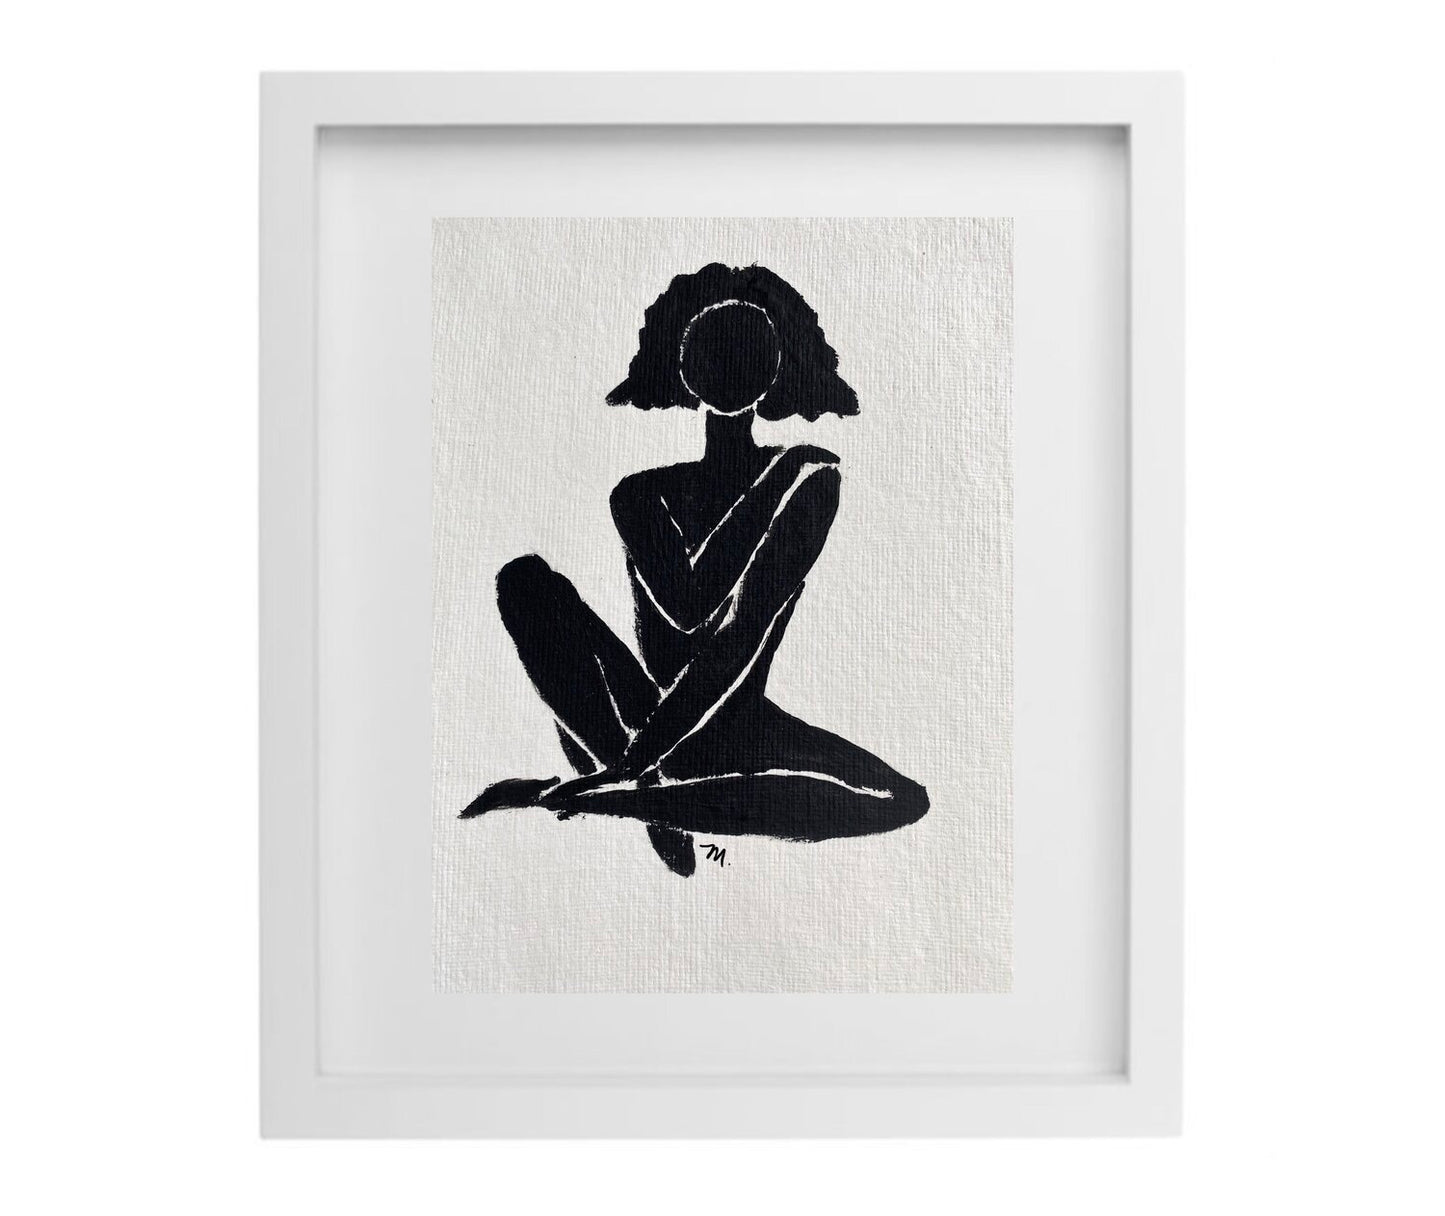 Black and white female figure artwork in a white frame